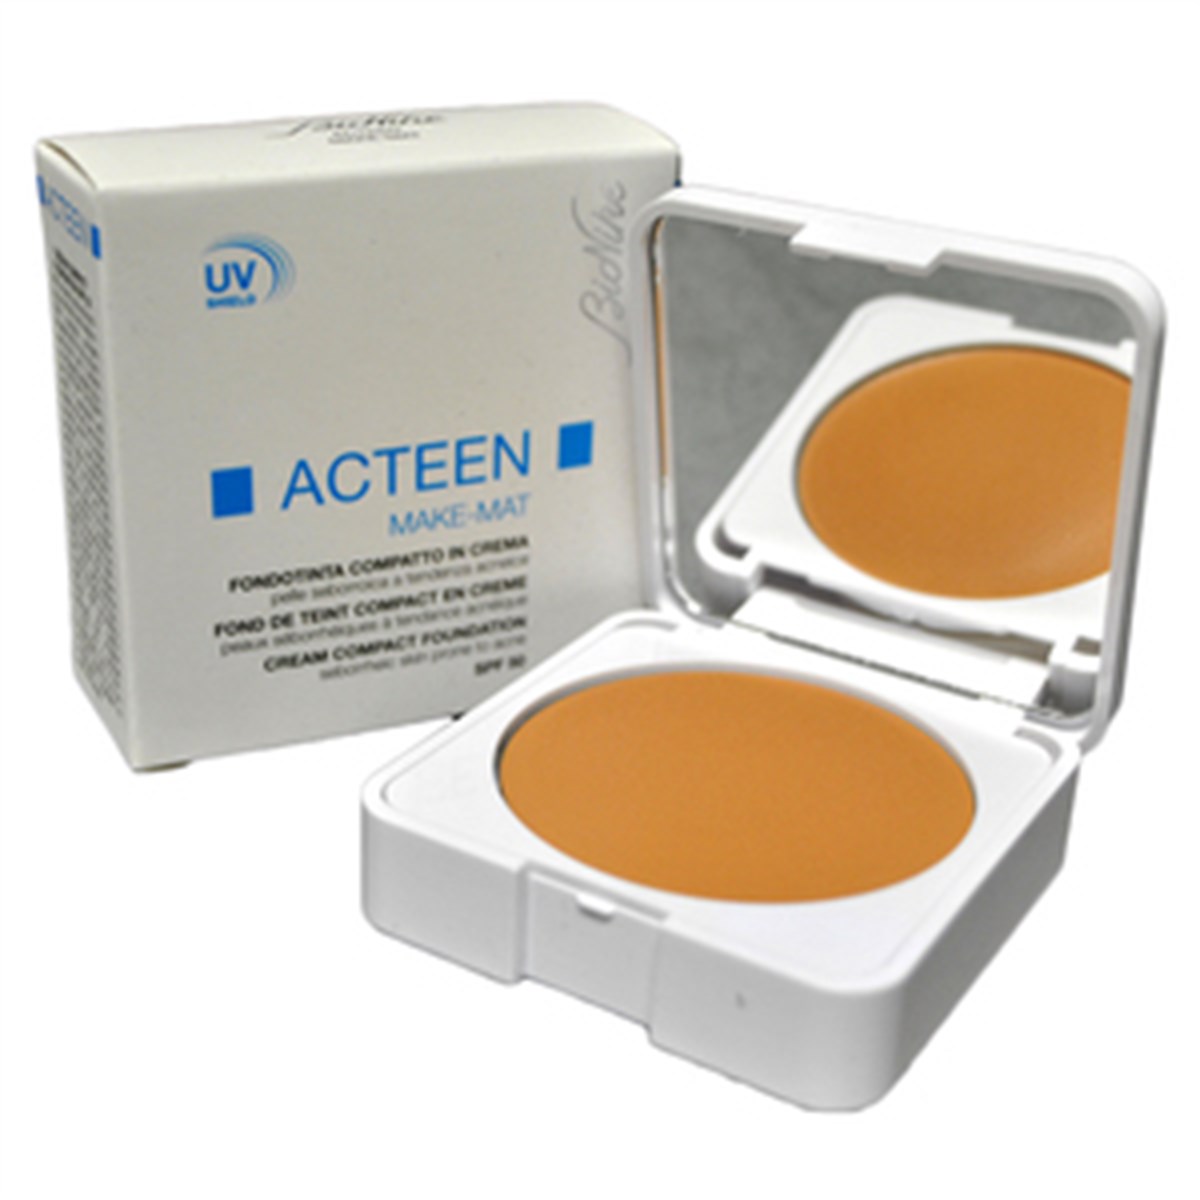 Bionike Acteen Make-mat in Cream Compact Foundation Spf50 9 ml (No:2)